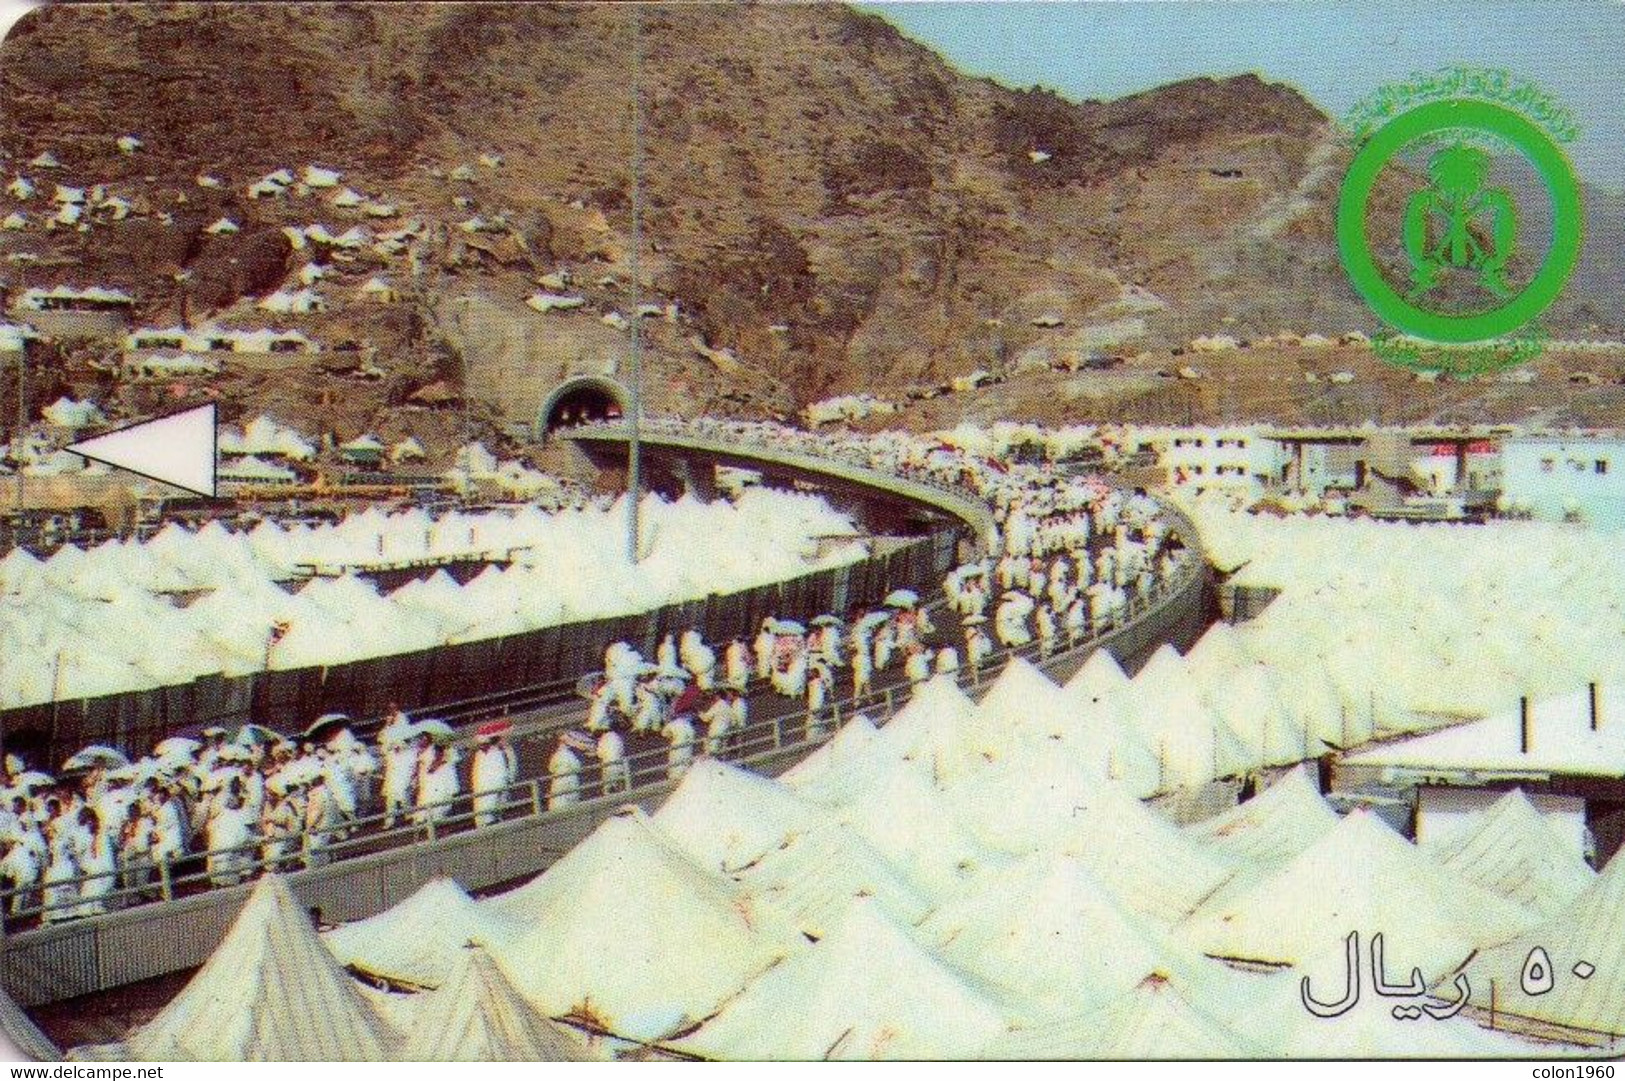 ARABIA SAUDITA. Mecca Tunnel Entrance "SAUDE". 1993. SA-STC-0003 (SAUDE). (008) - Arabia Saudita